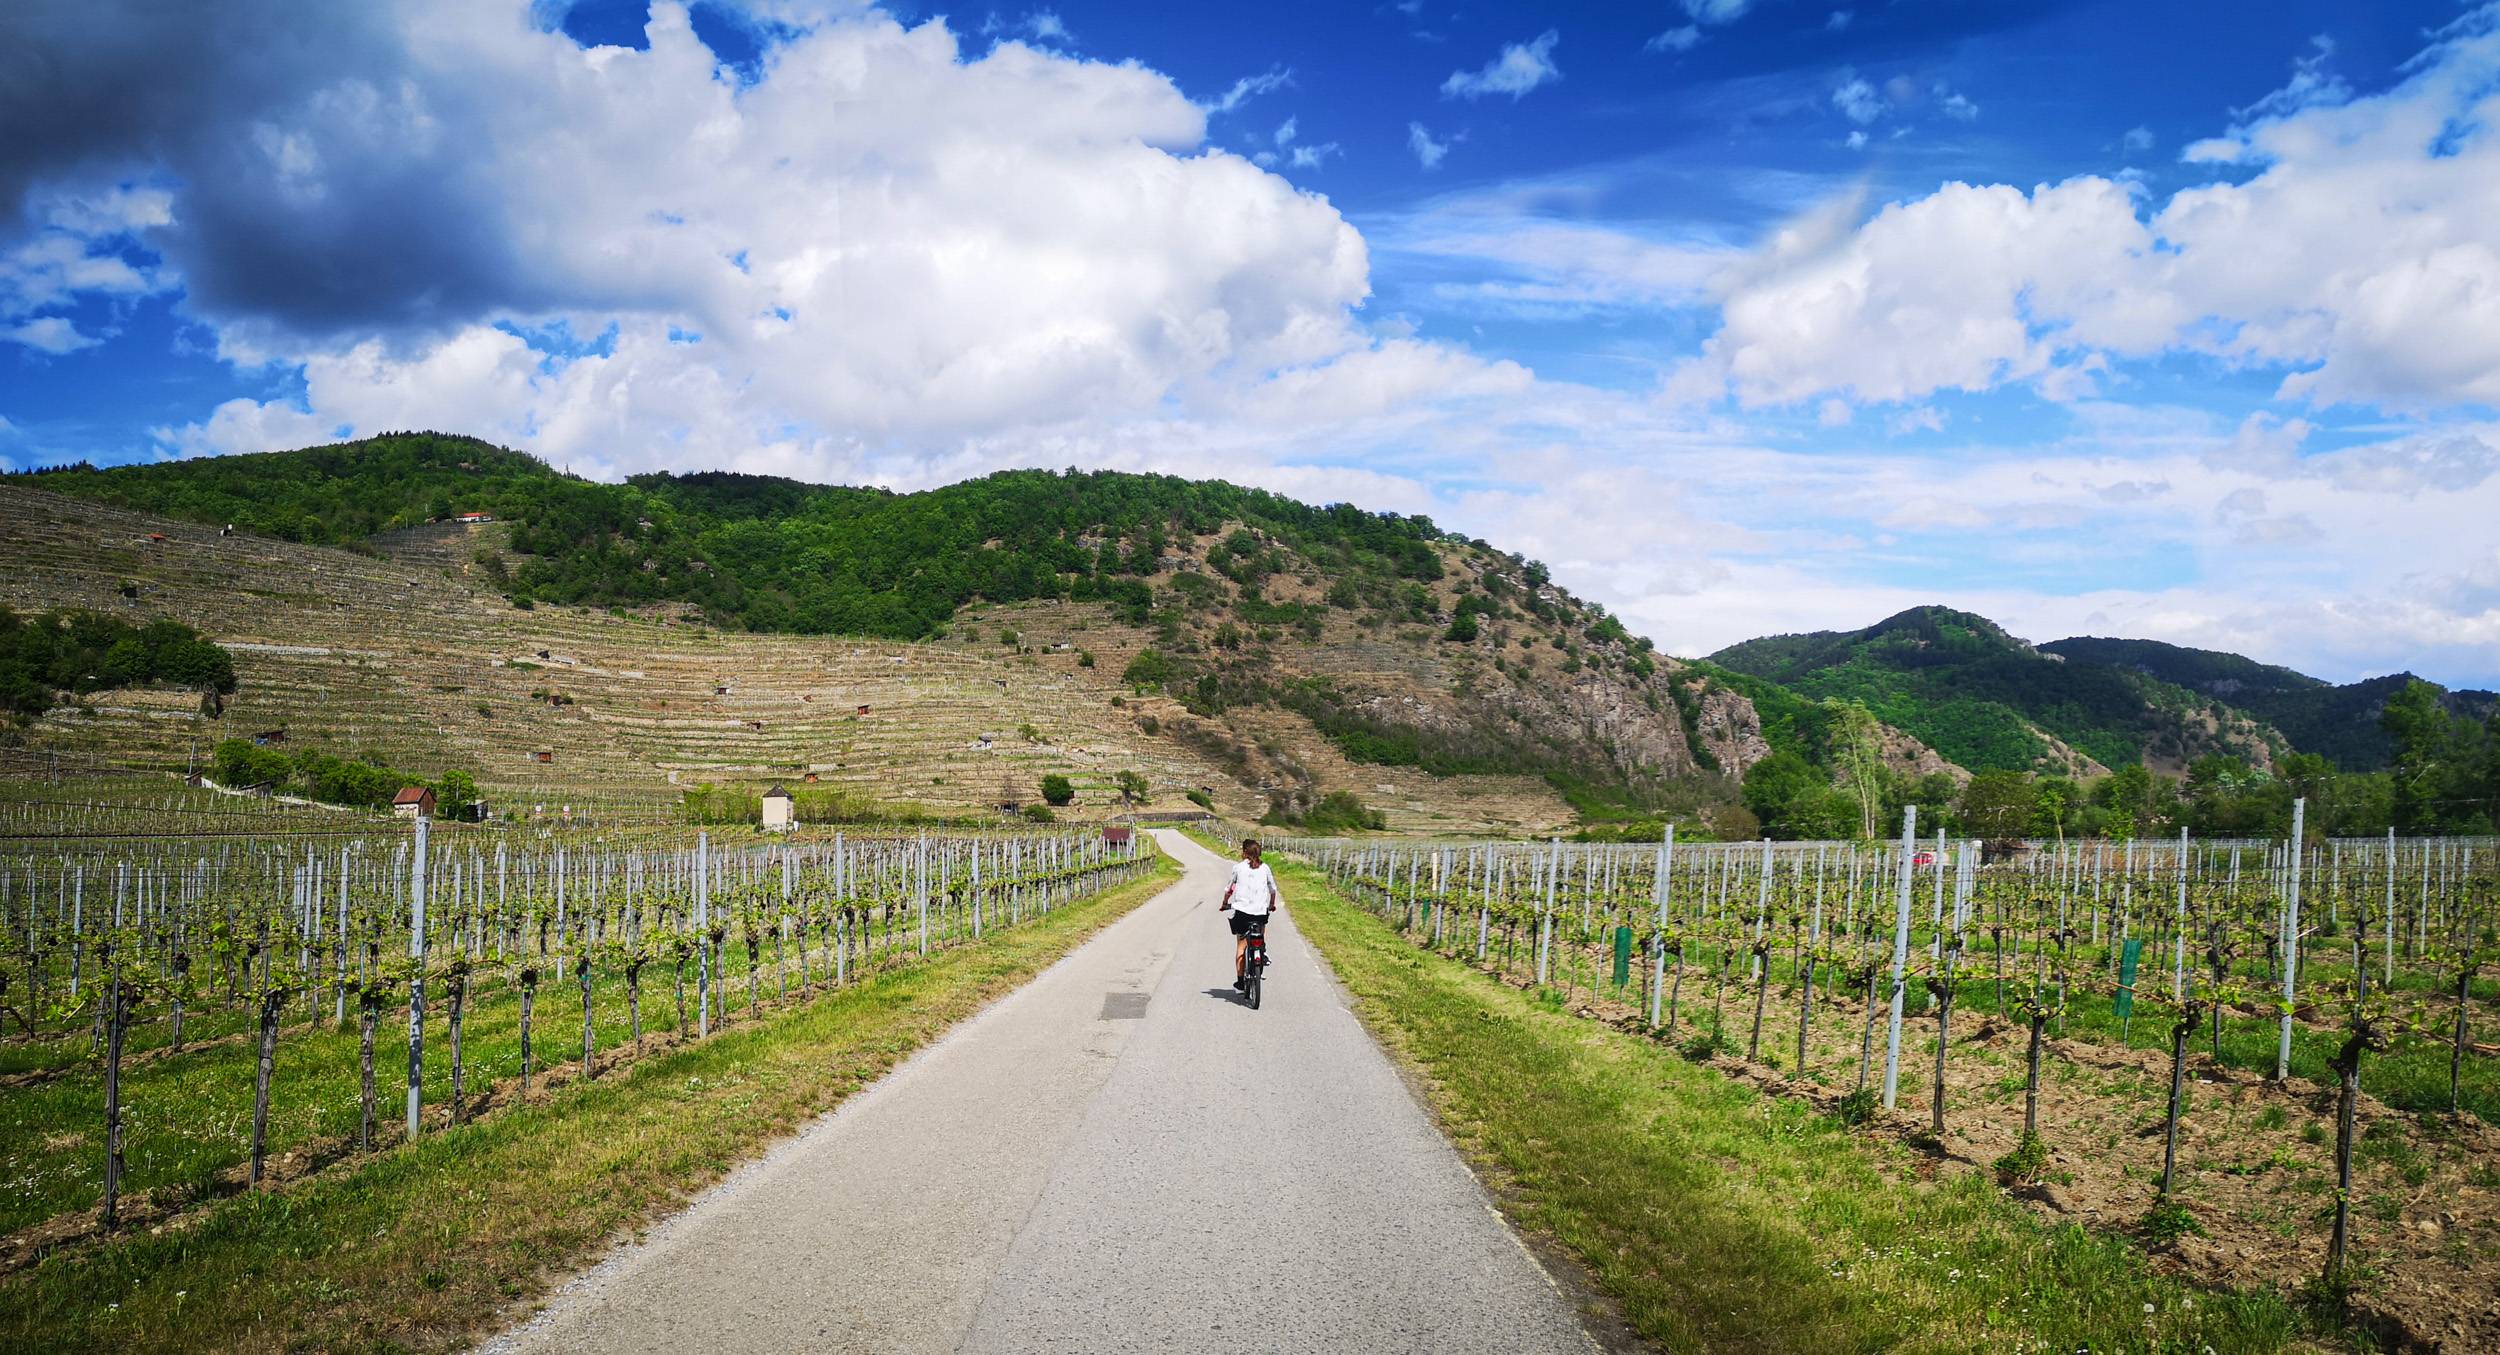 Biking through the vineyards of Wachau, Austria